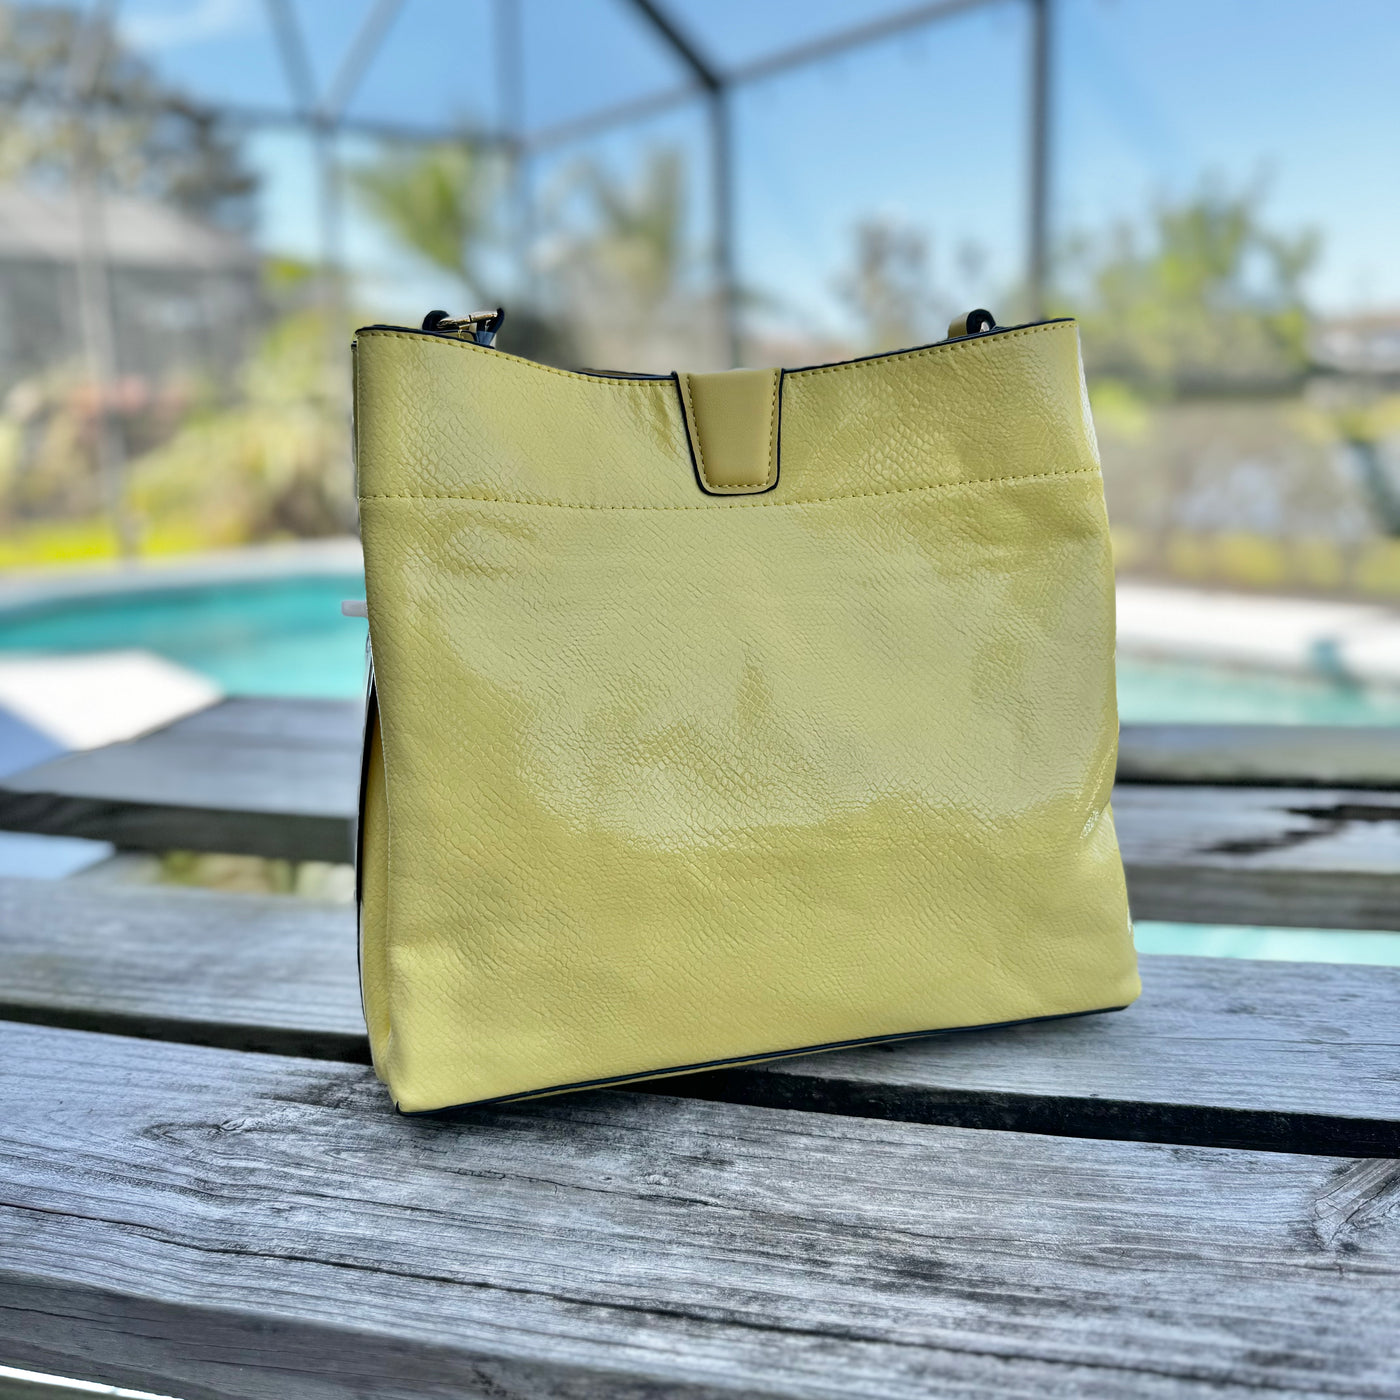 The Tati Bag